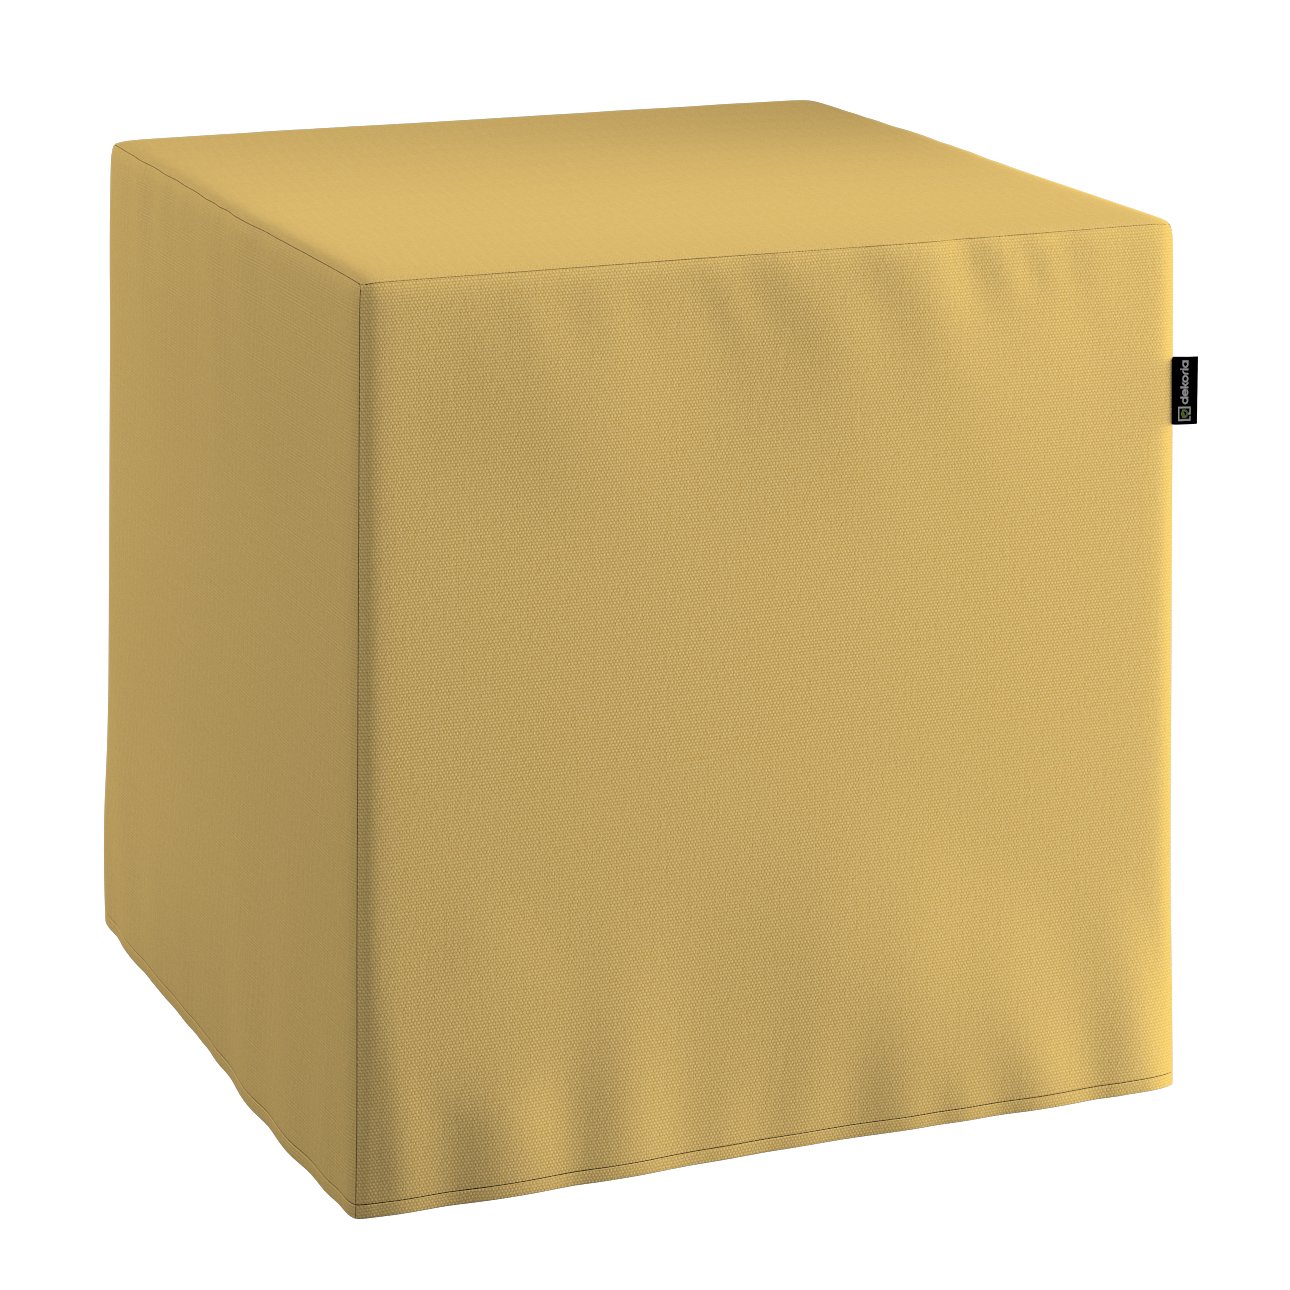 Dekoria Taburetka tvrdá, kocka, matná žltá, 40 x 40 x 40 cm, Cotton Panama, 702-41